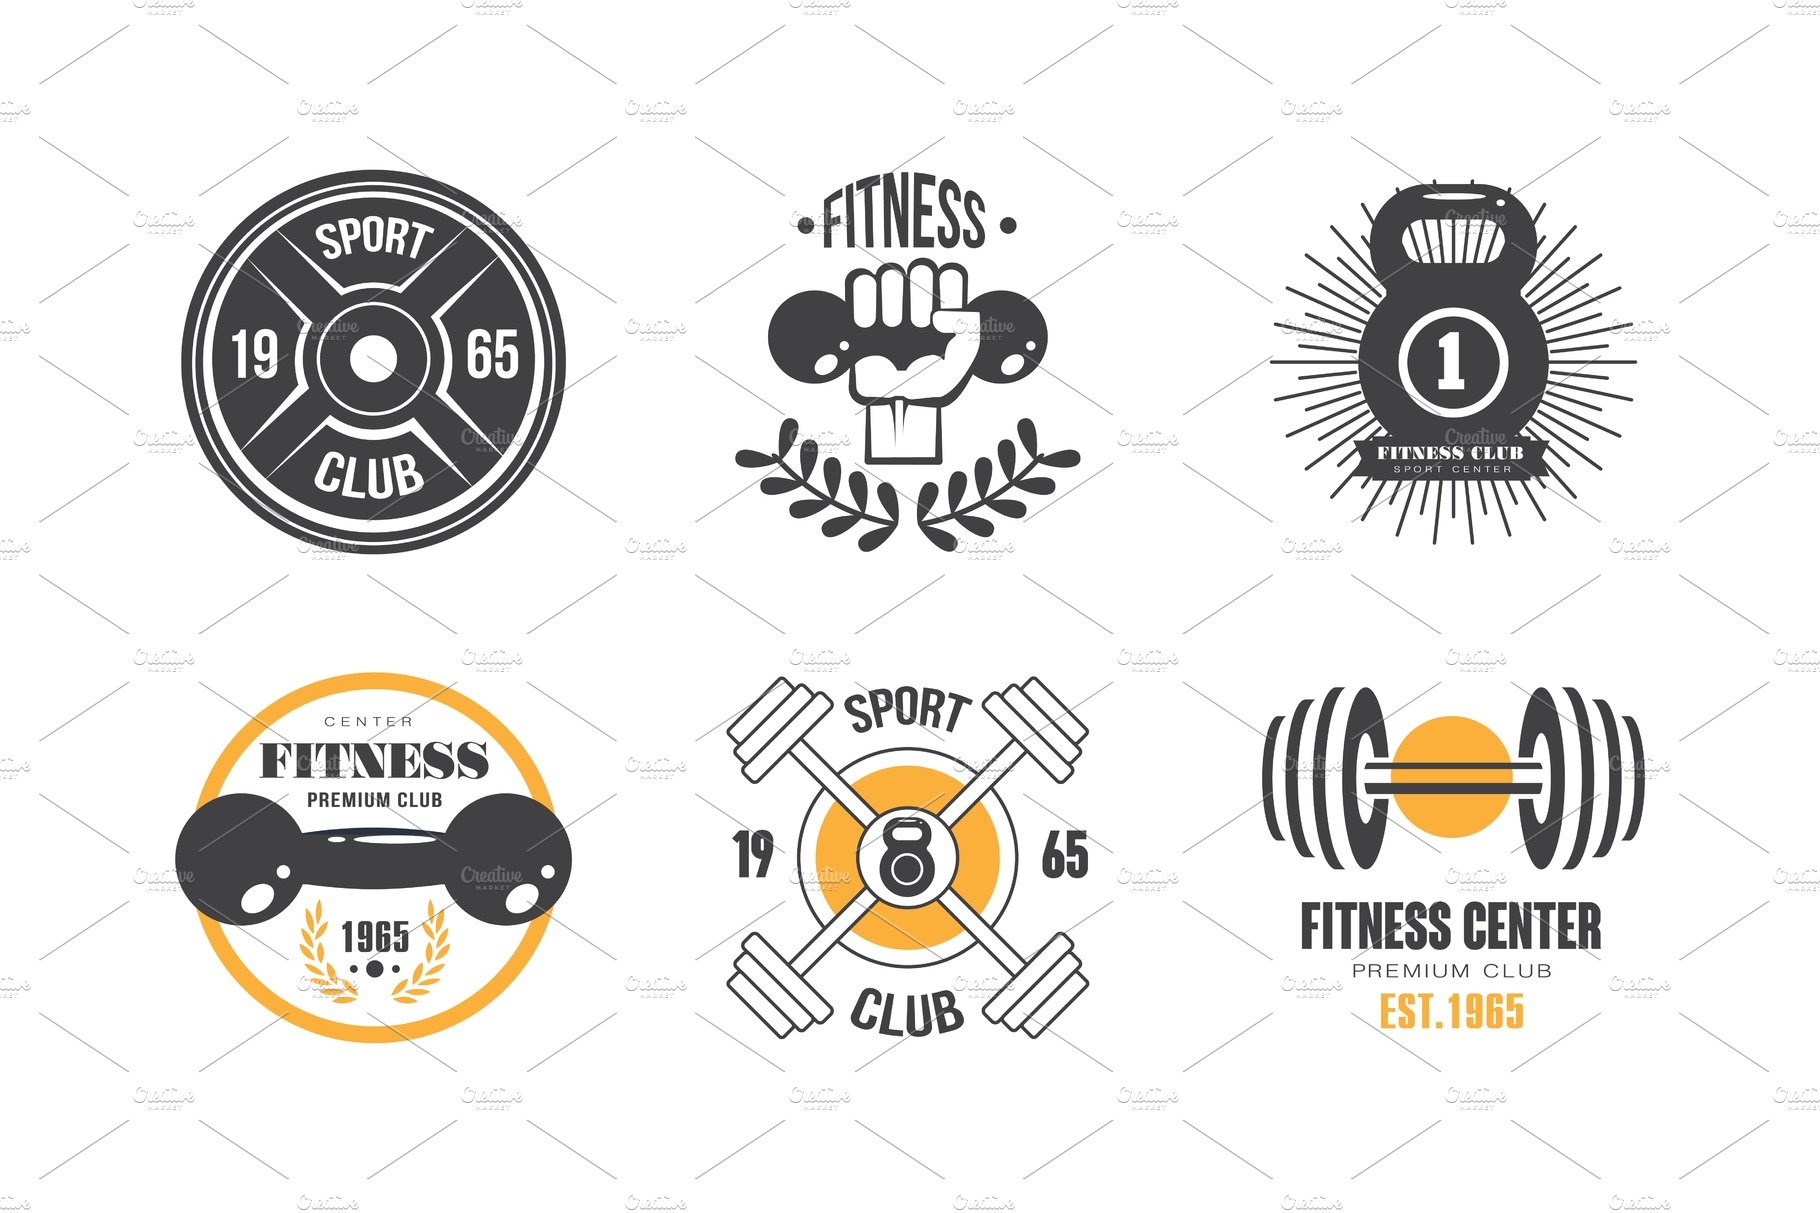 Fitness club vintage logo set cover image.